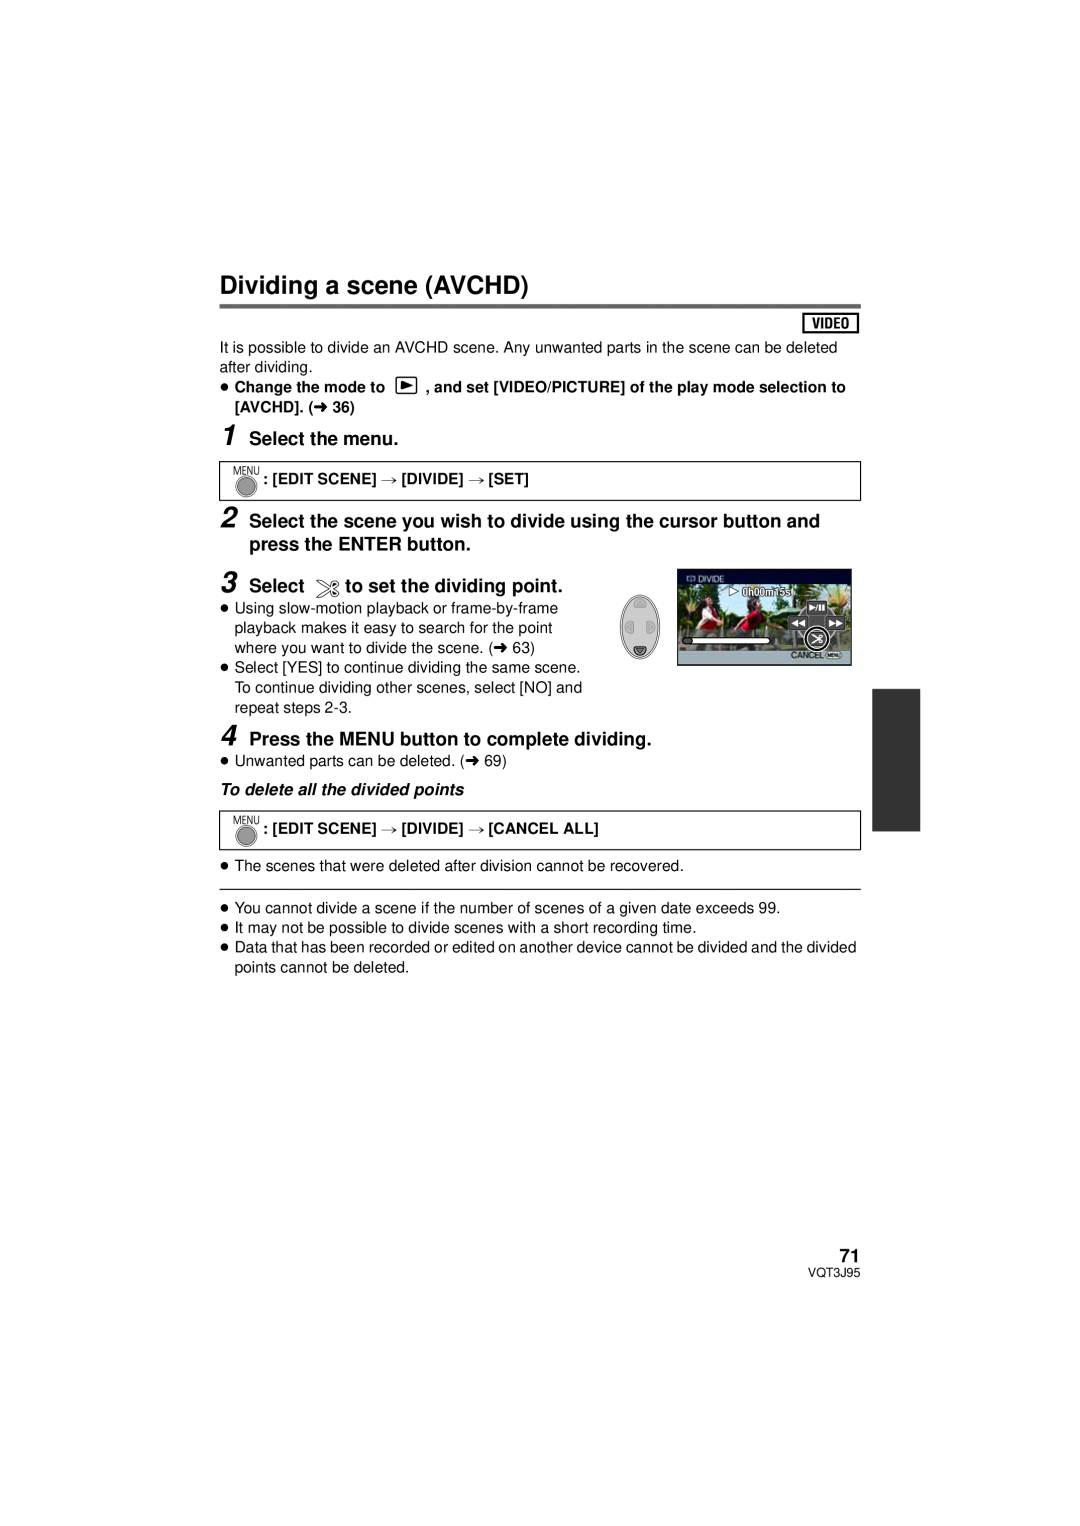 Panasonic HDC-TM40P/PC Dividing a scene AVCHD, Select the menu, to set the dividing point, Edit Scene # Divide # Set 